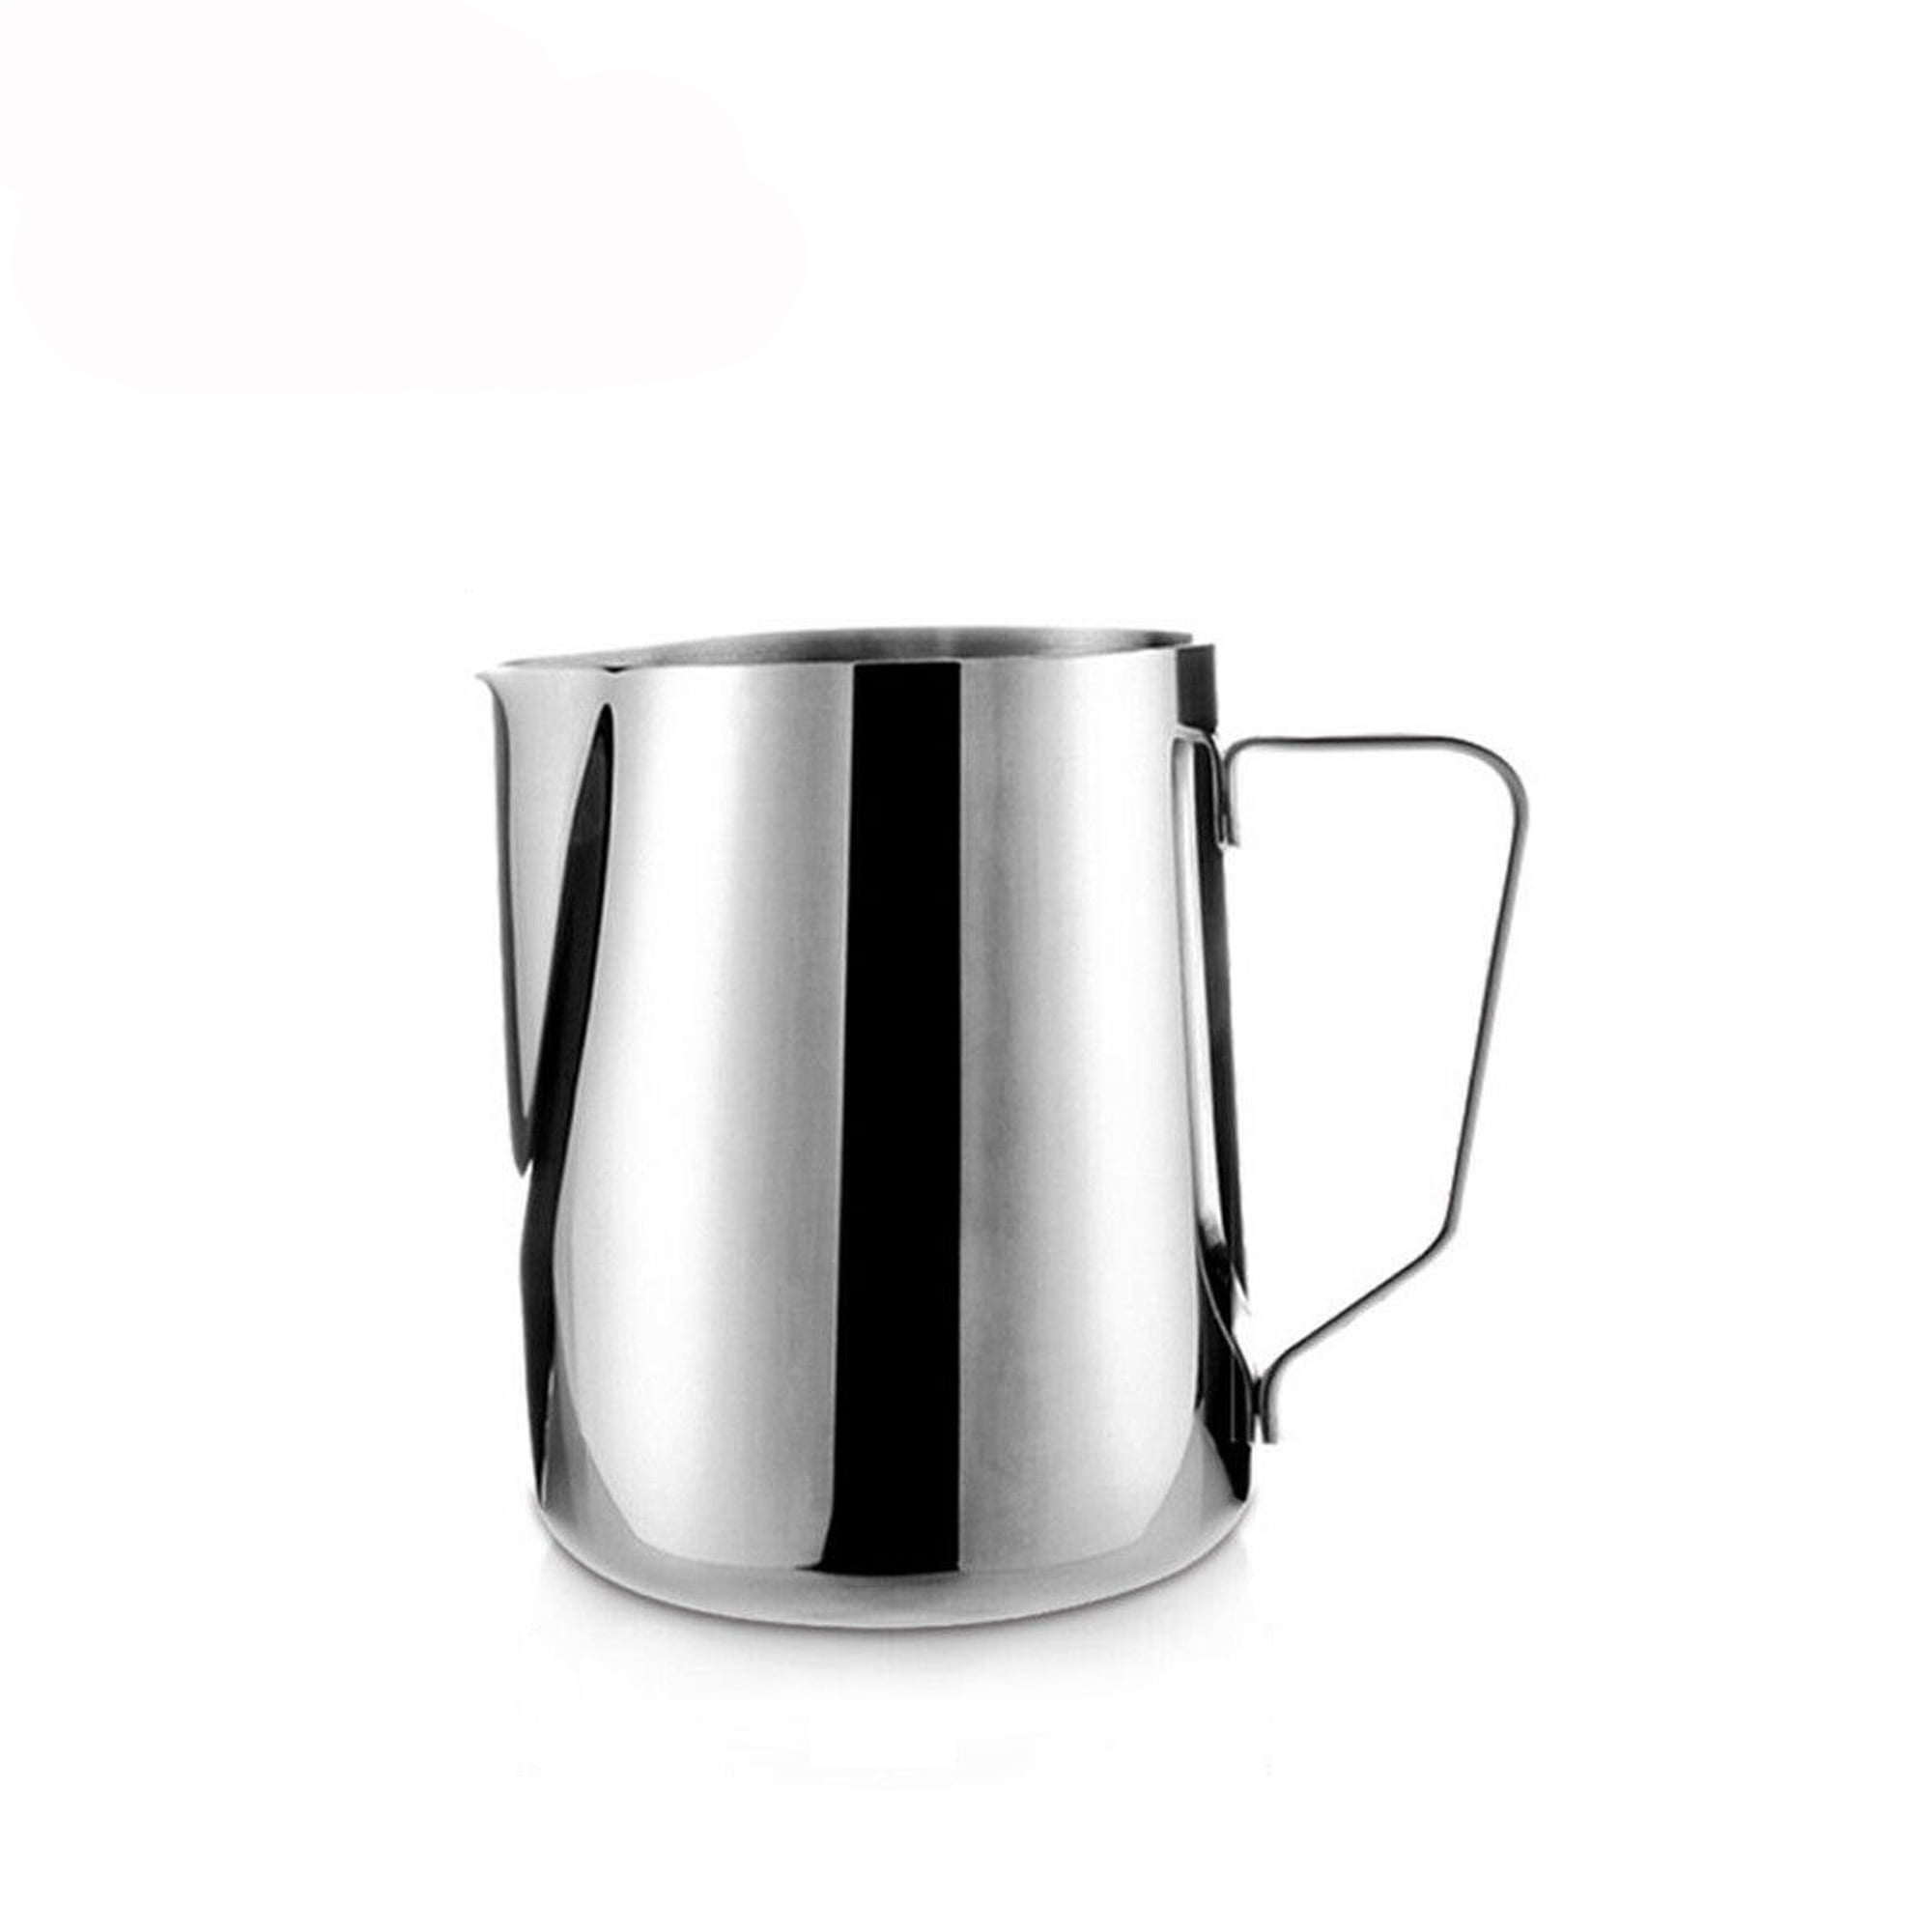 Stainless Steel Milk Frothing Pitcher Art Jug Mug Creamer Latte Coffee Craft Cup 